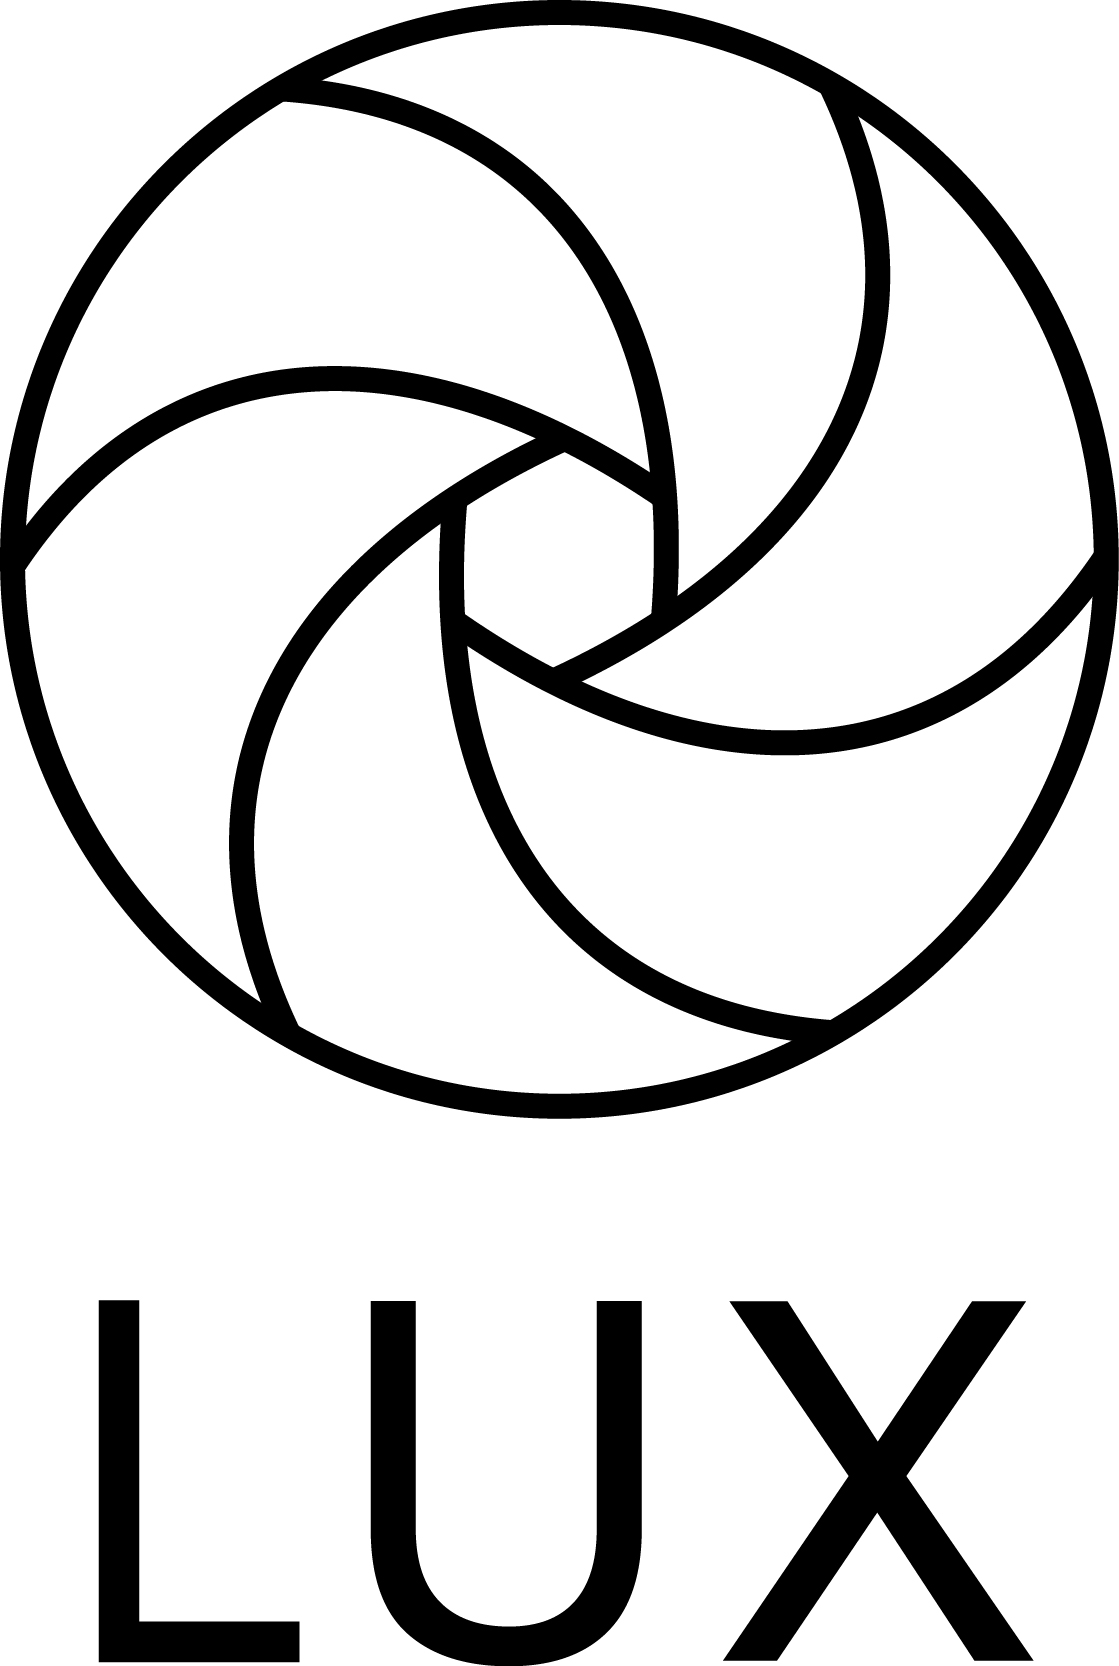 LUX logo